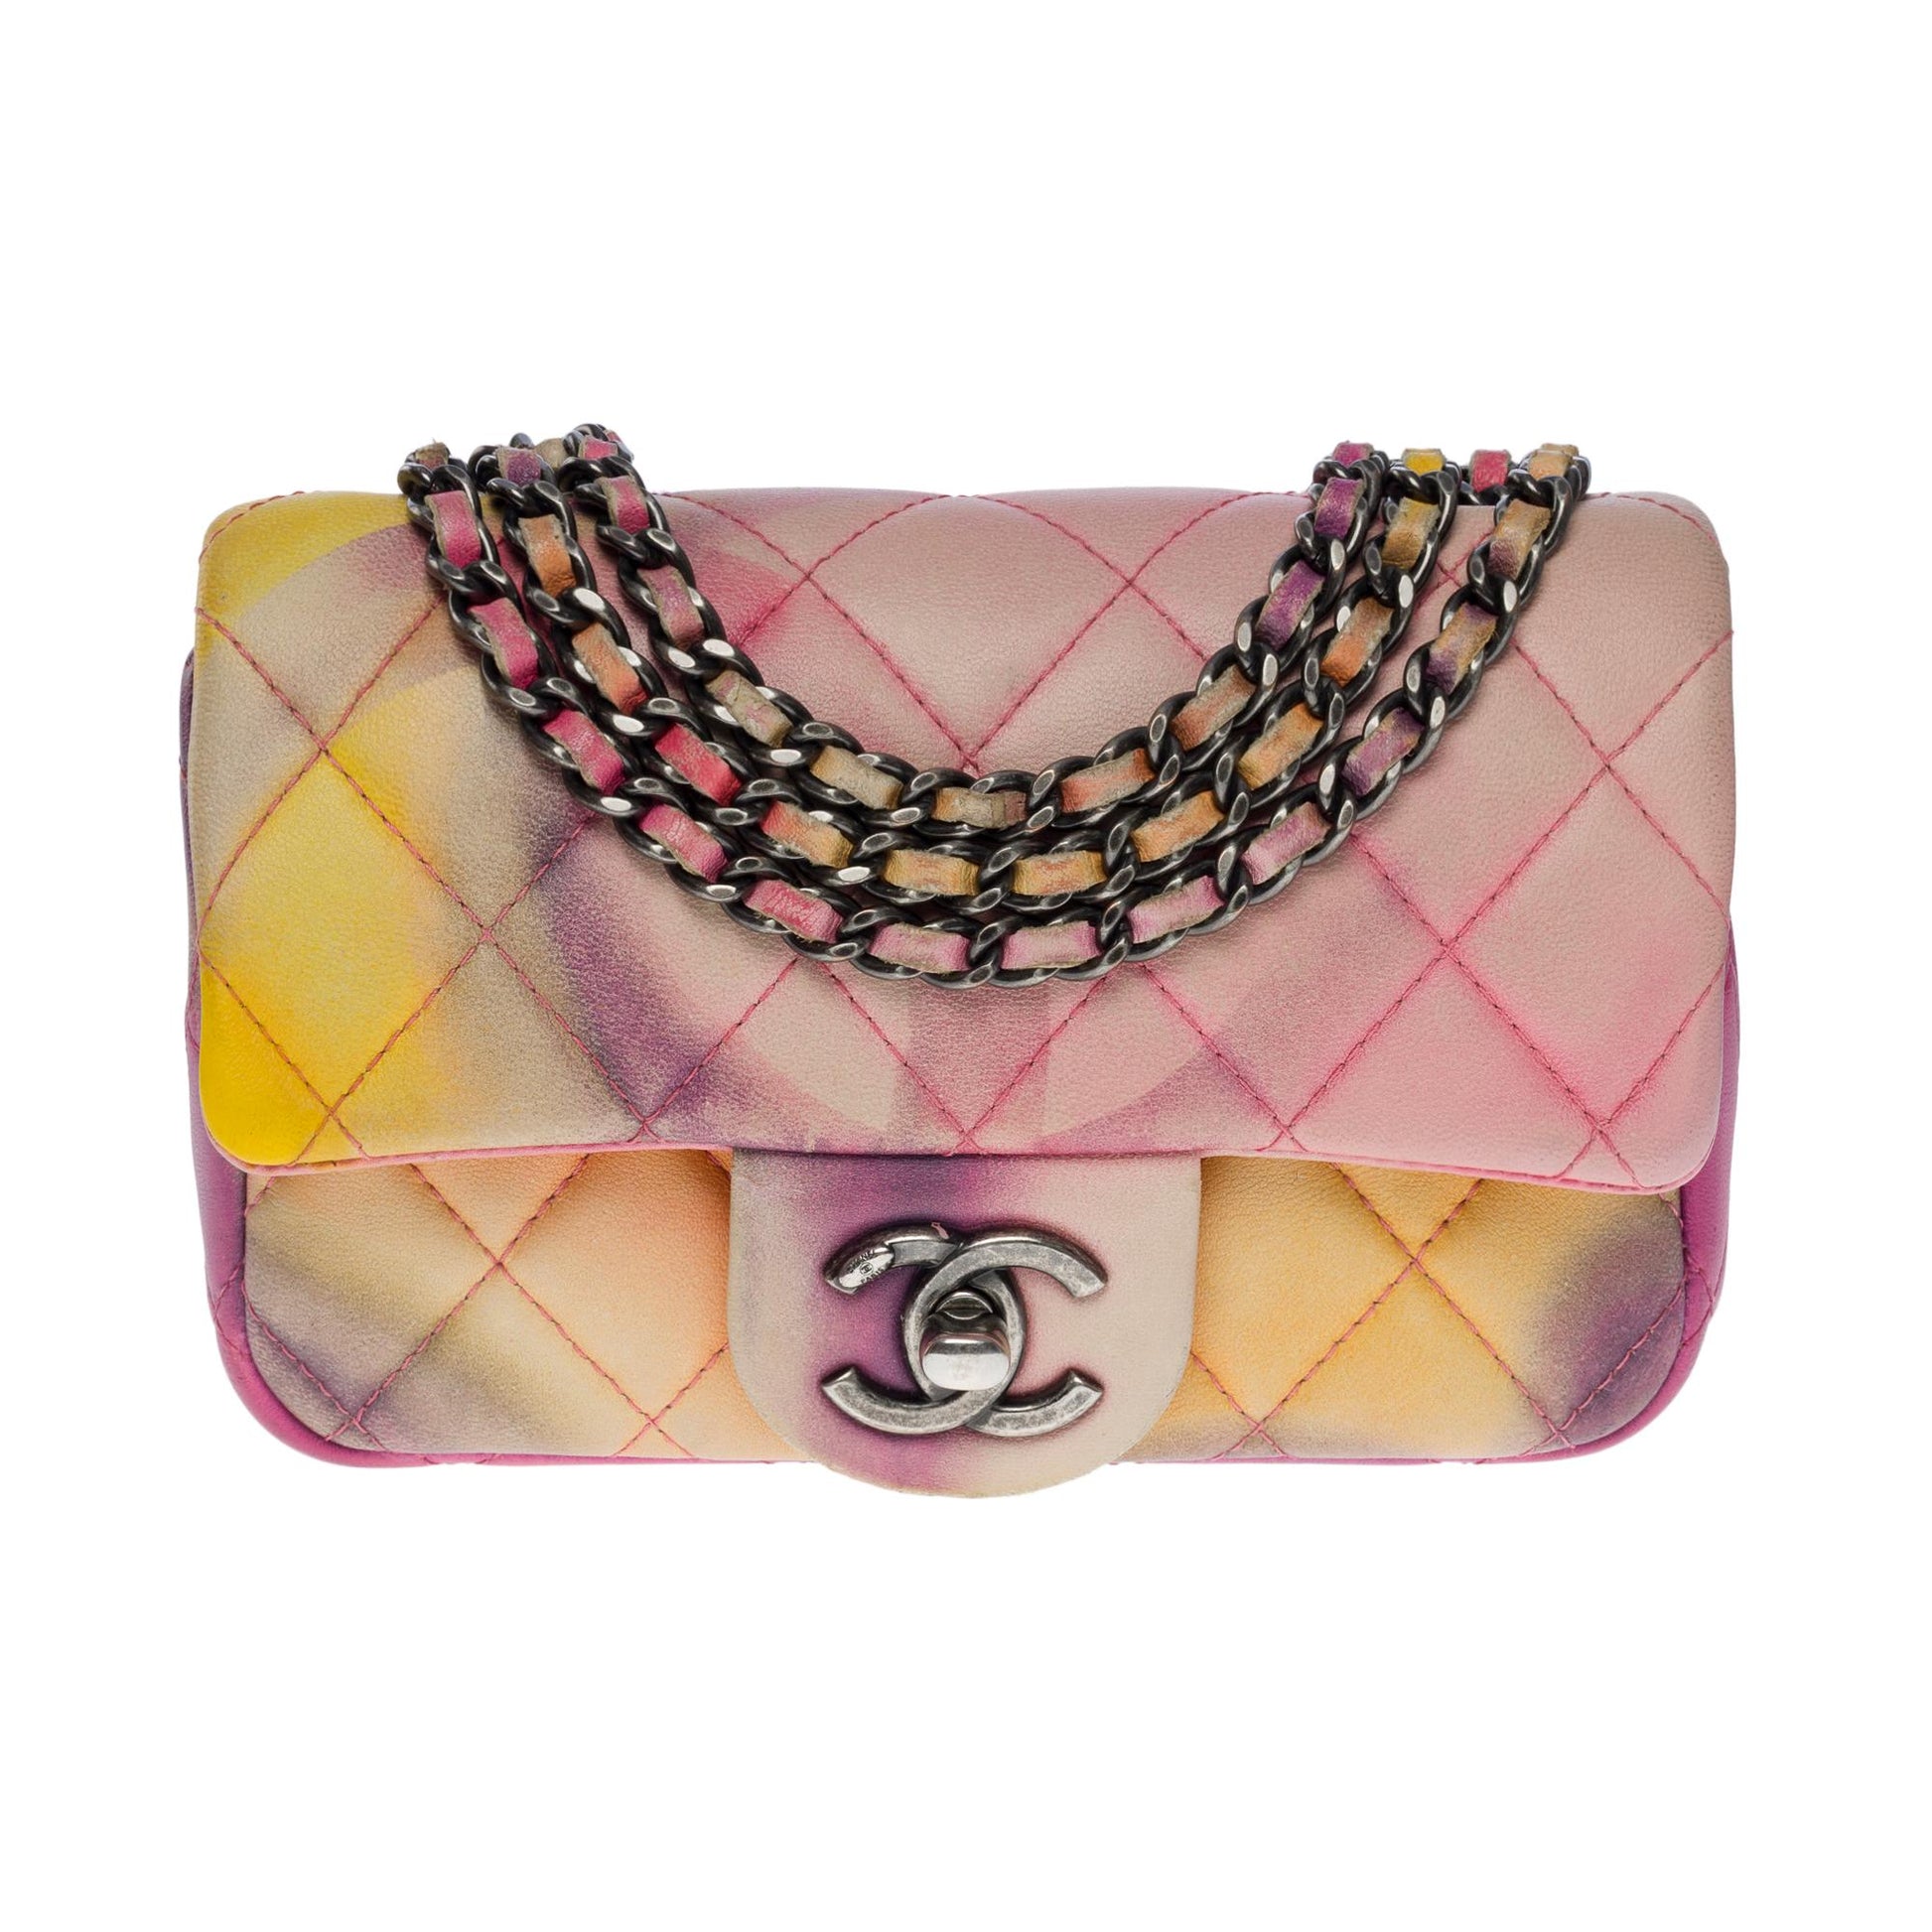 Chanel Rare Power Flower Timeless Mini Shoulder Bag in Multicolor Leather, SHW